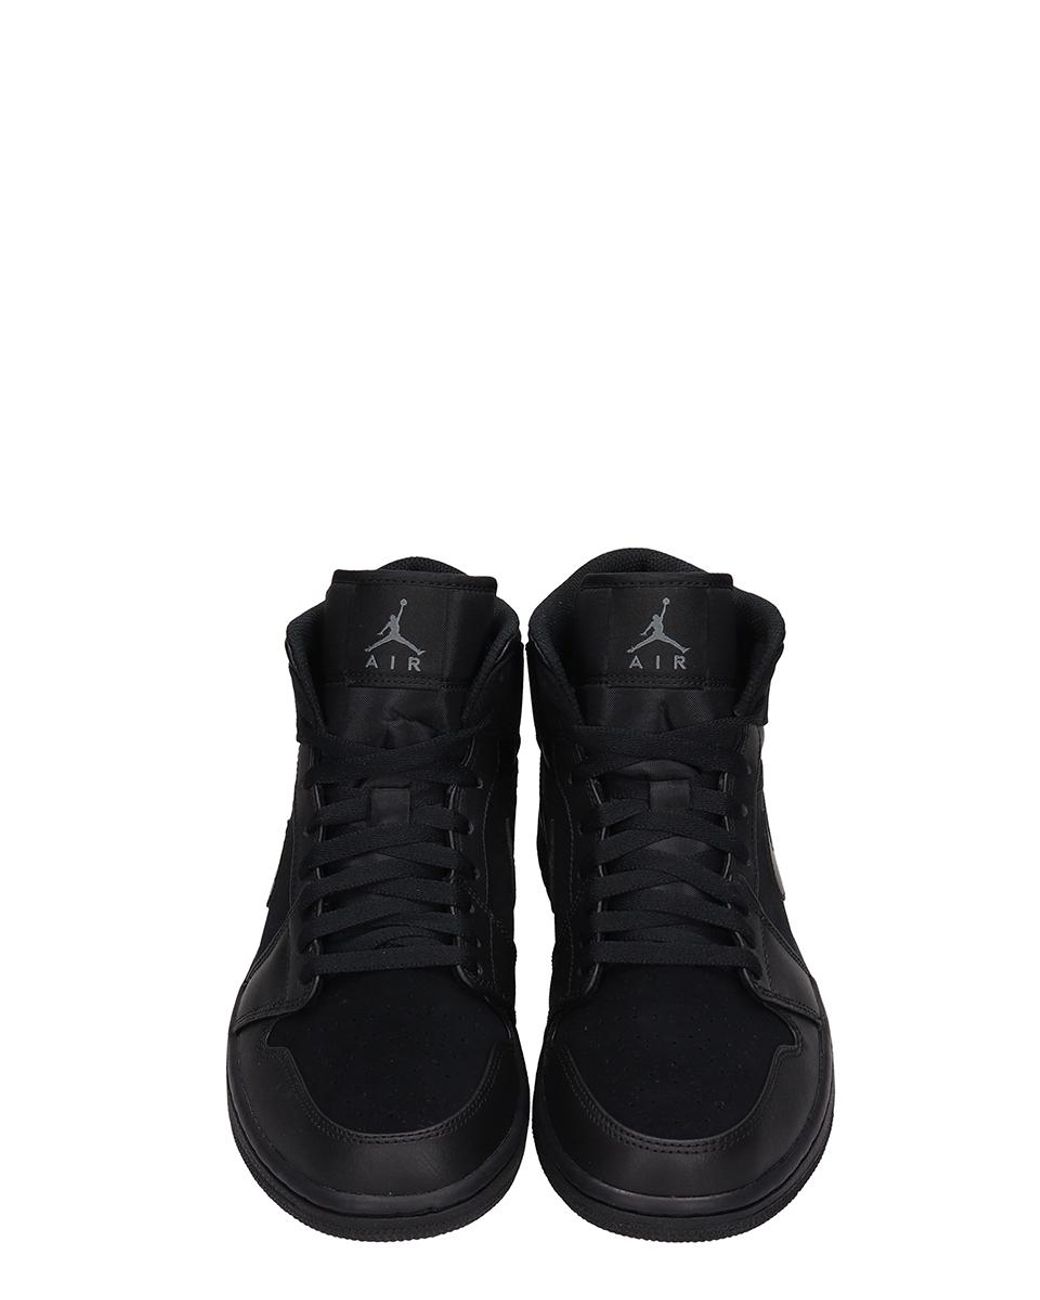 air jordan shoes all black